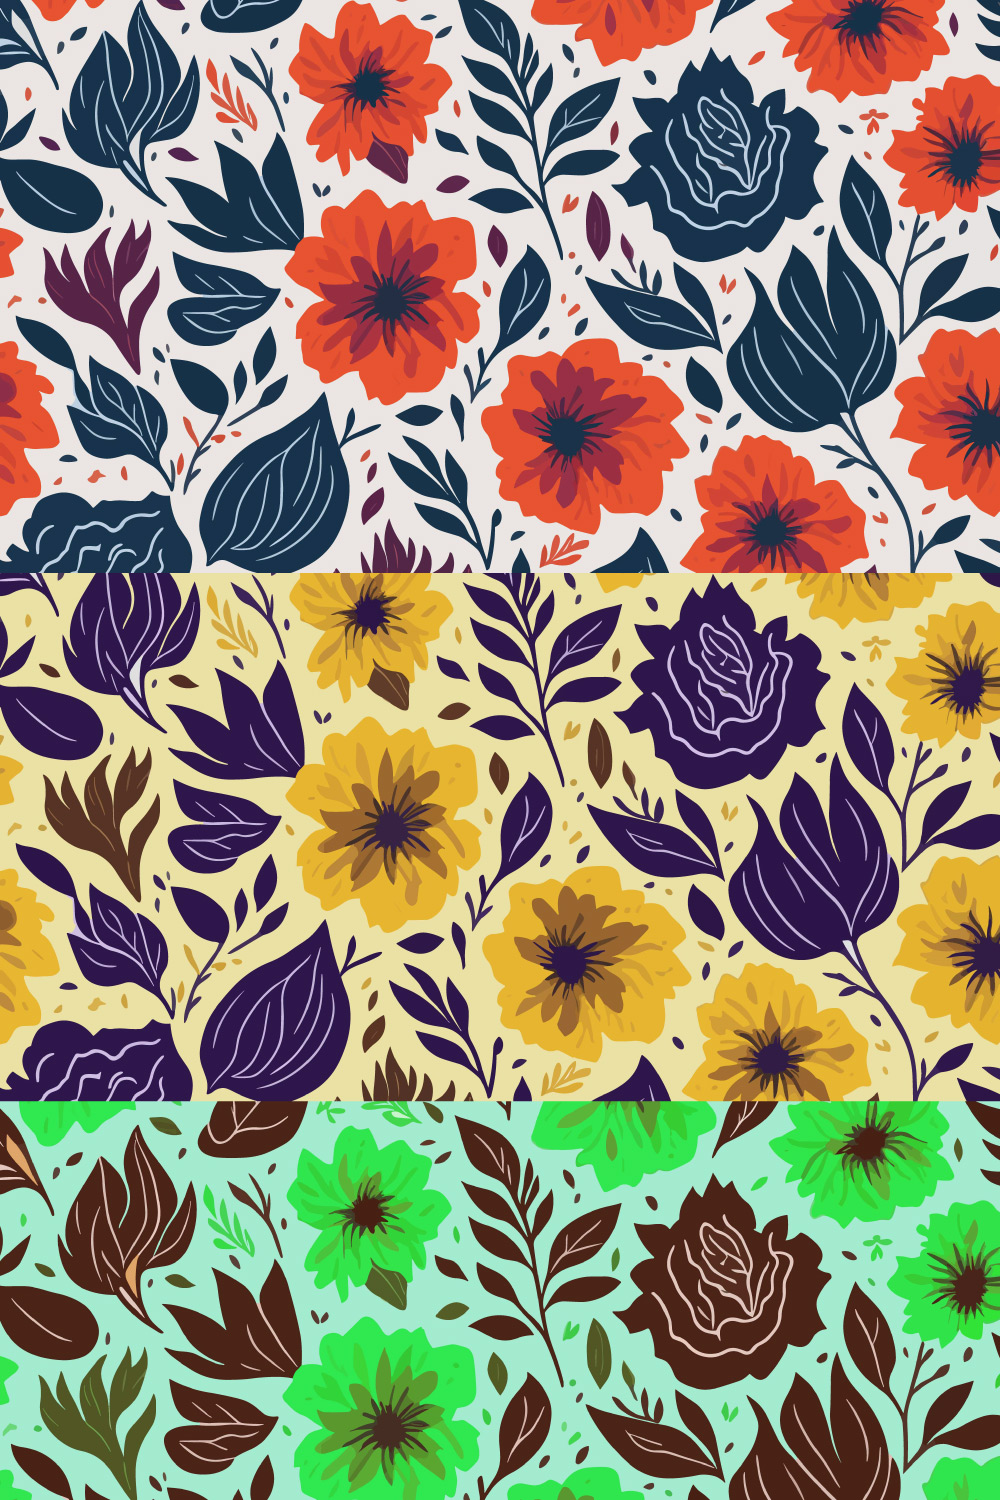 3 sets of flower pattern designs pinterest preview image.